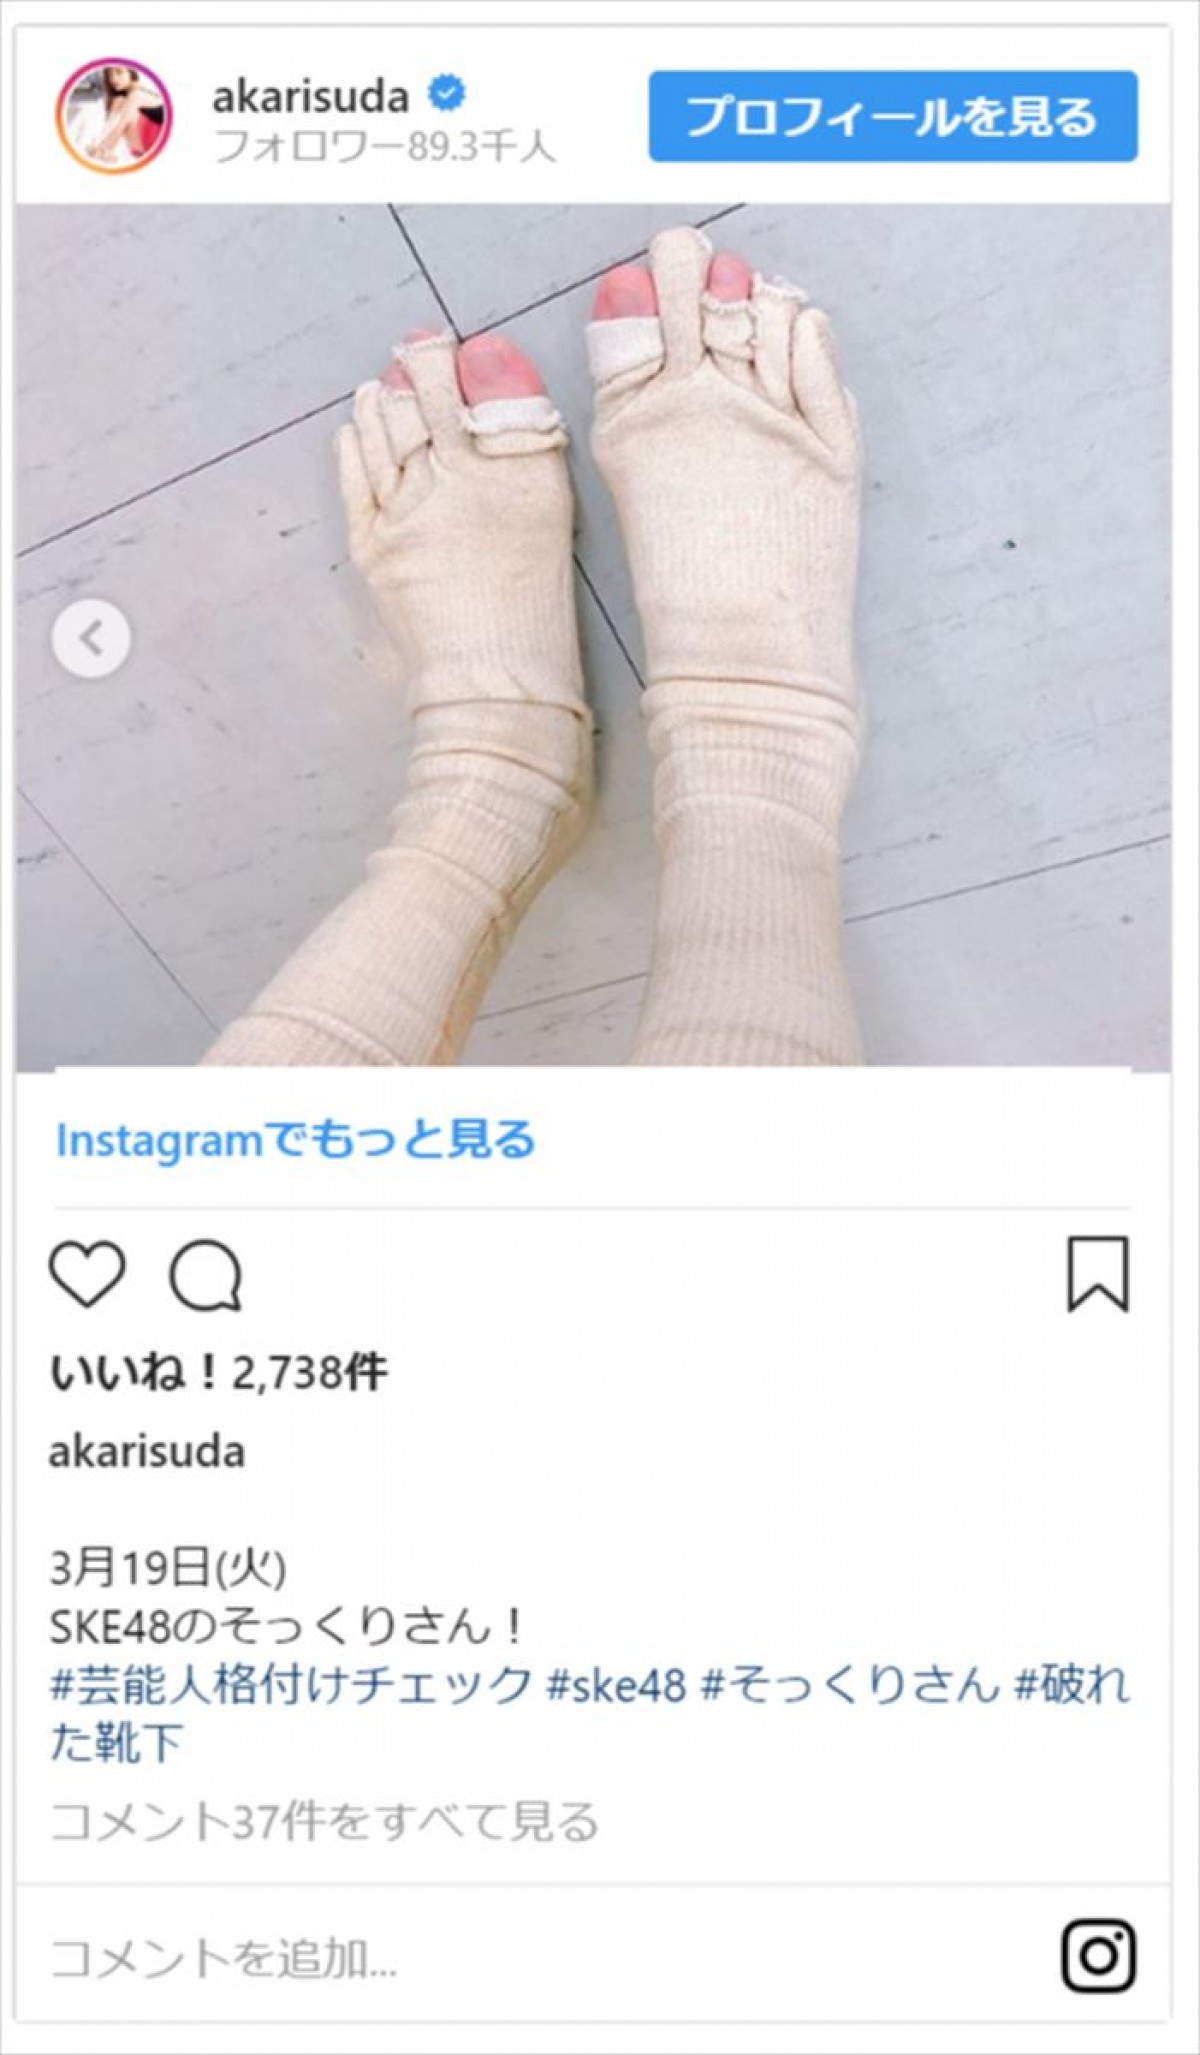 SKE48松井珠理奈、須田亜香里ら、穴あき靴下の『格付け』オフショット